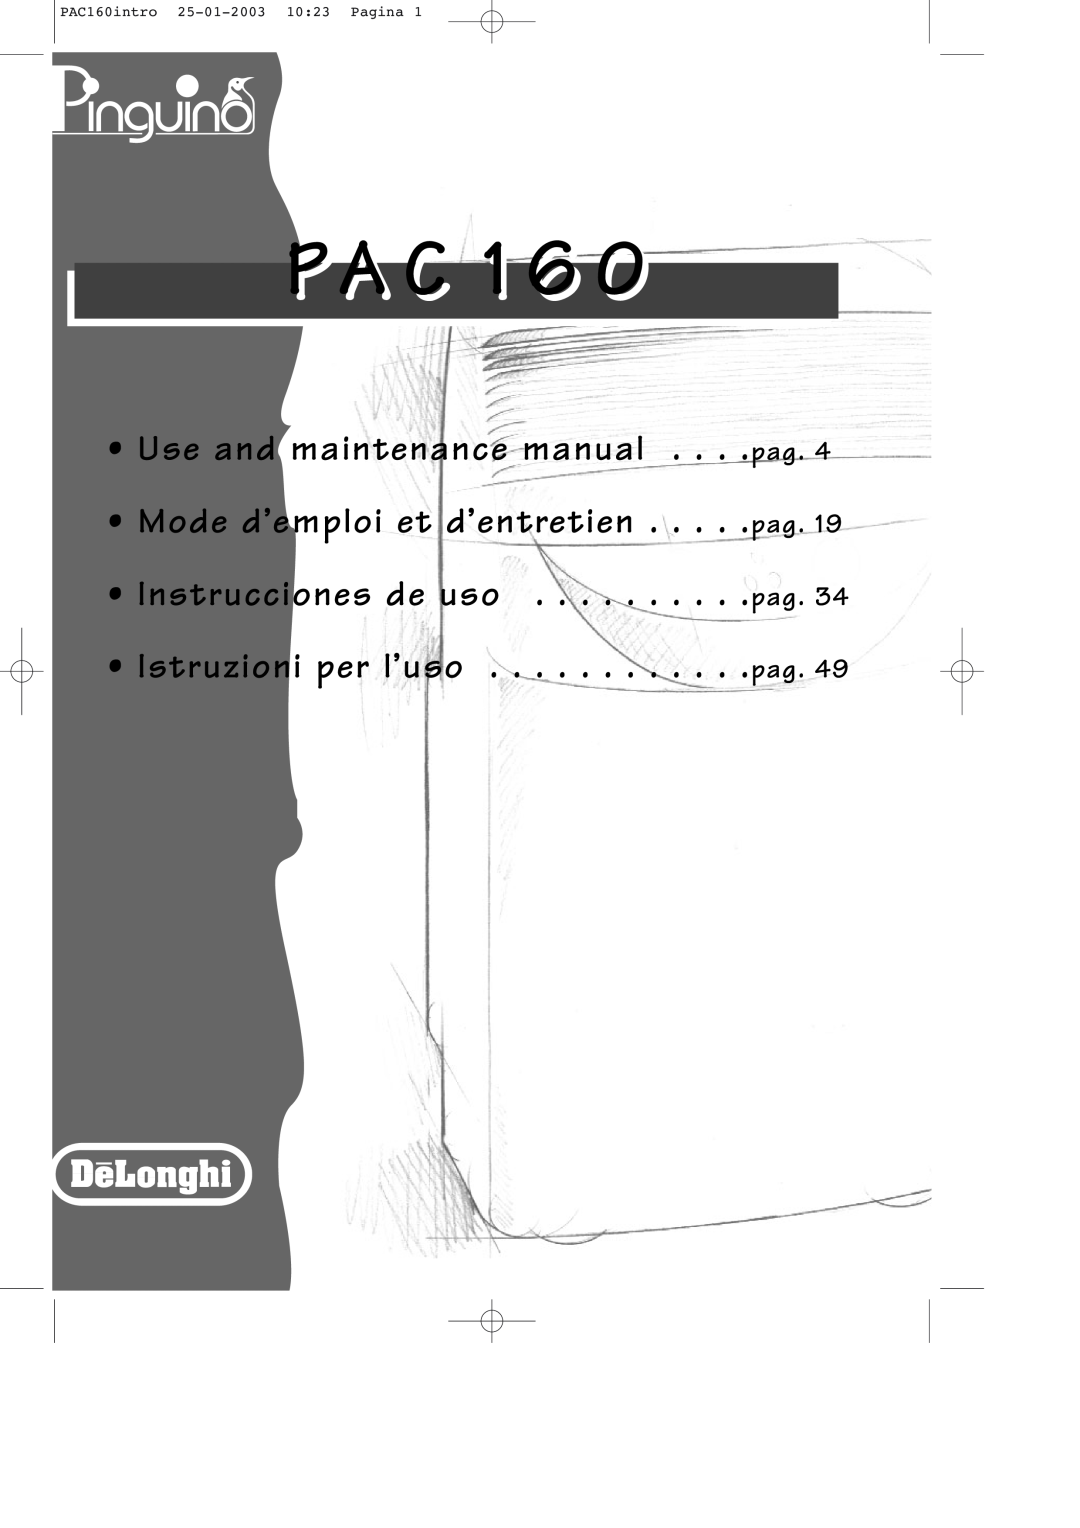 DeLonghi PAC160 manual Pa C, Use and maintenance manual . . . .pag, Mode d’emploi et d’entretien . . . . .pag 